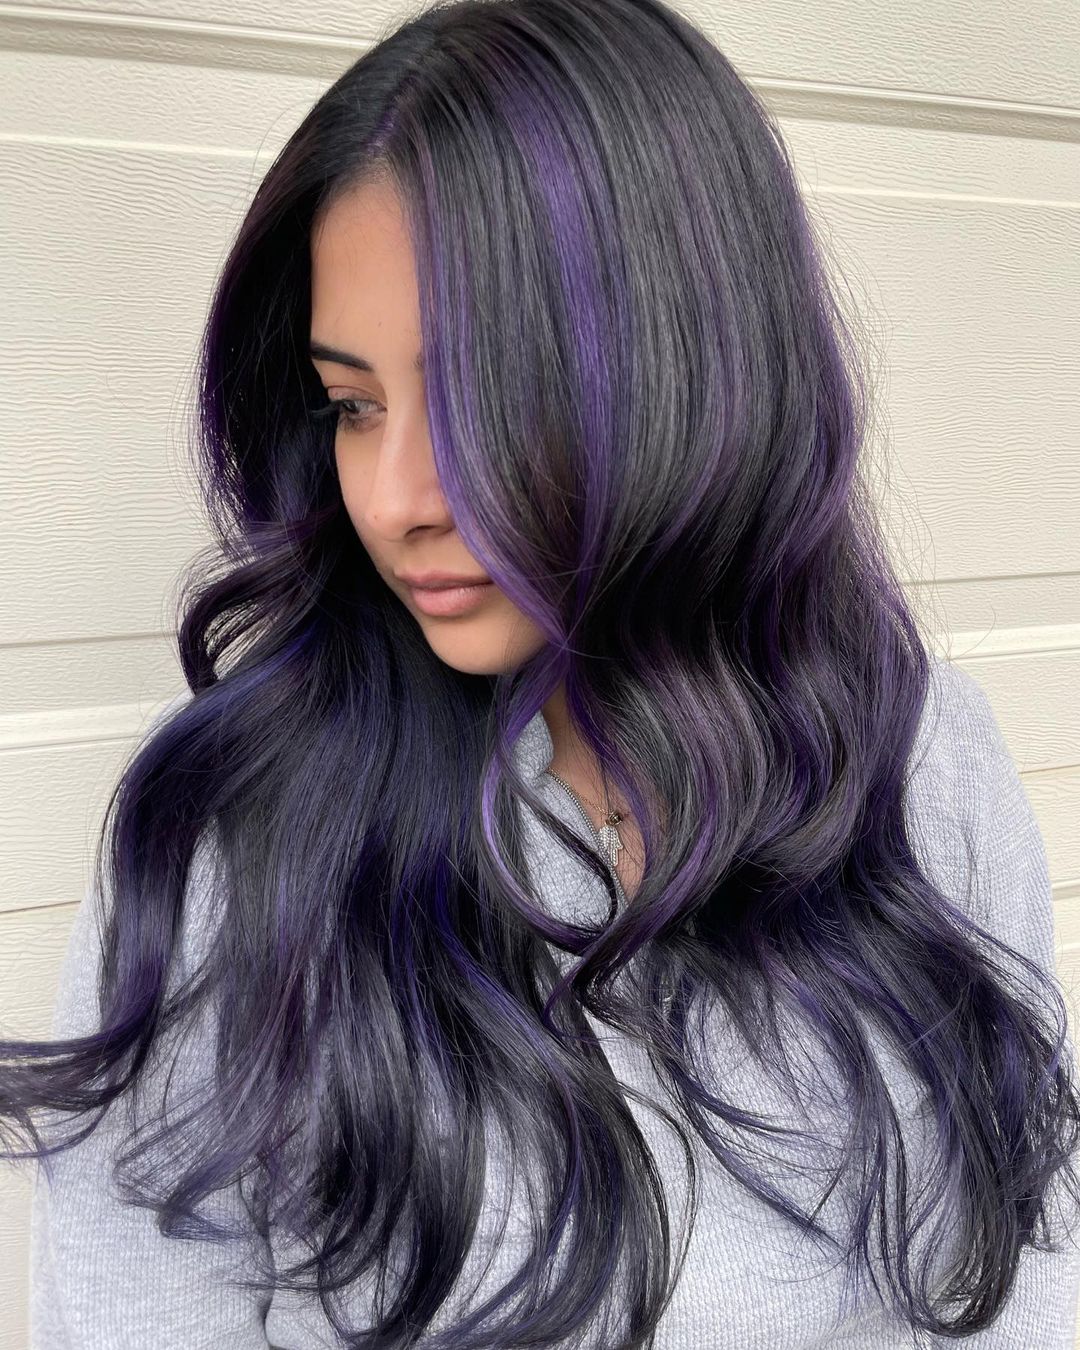 Long Black Hair with Dark Purple Highlights